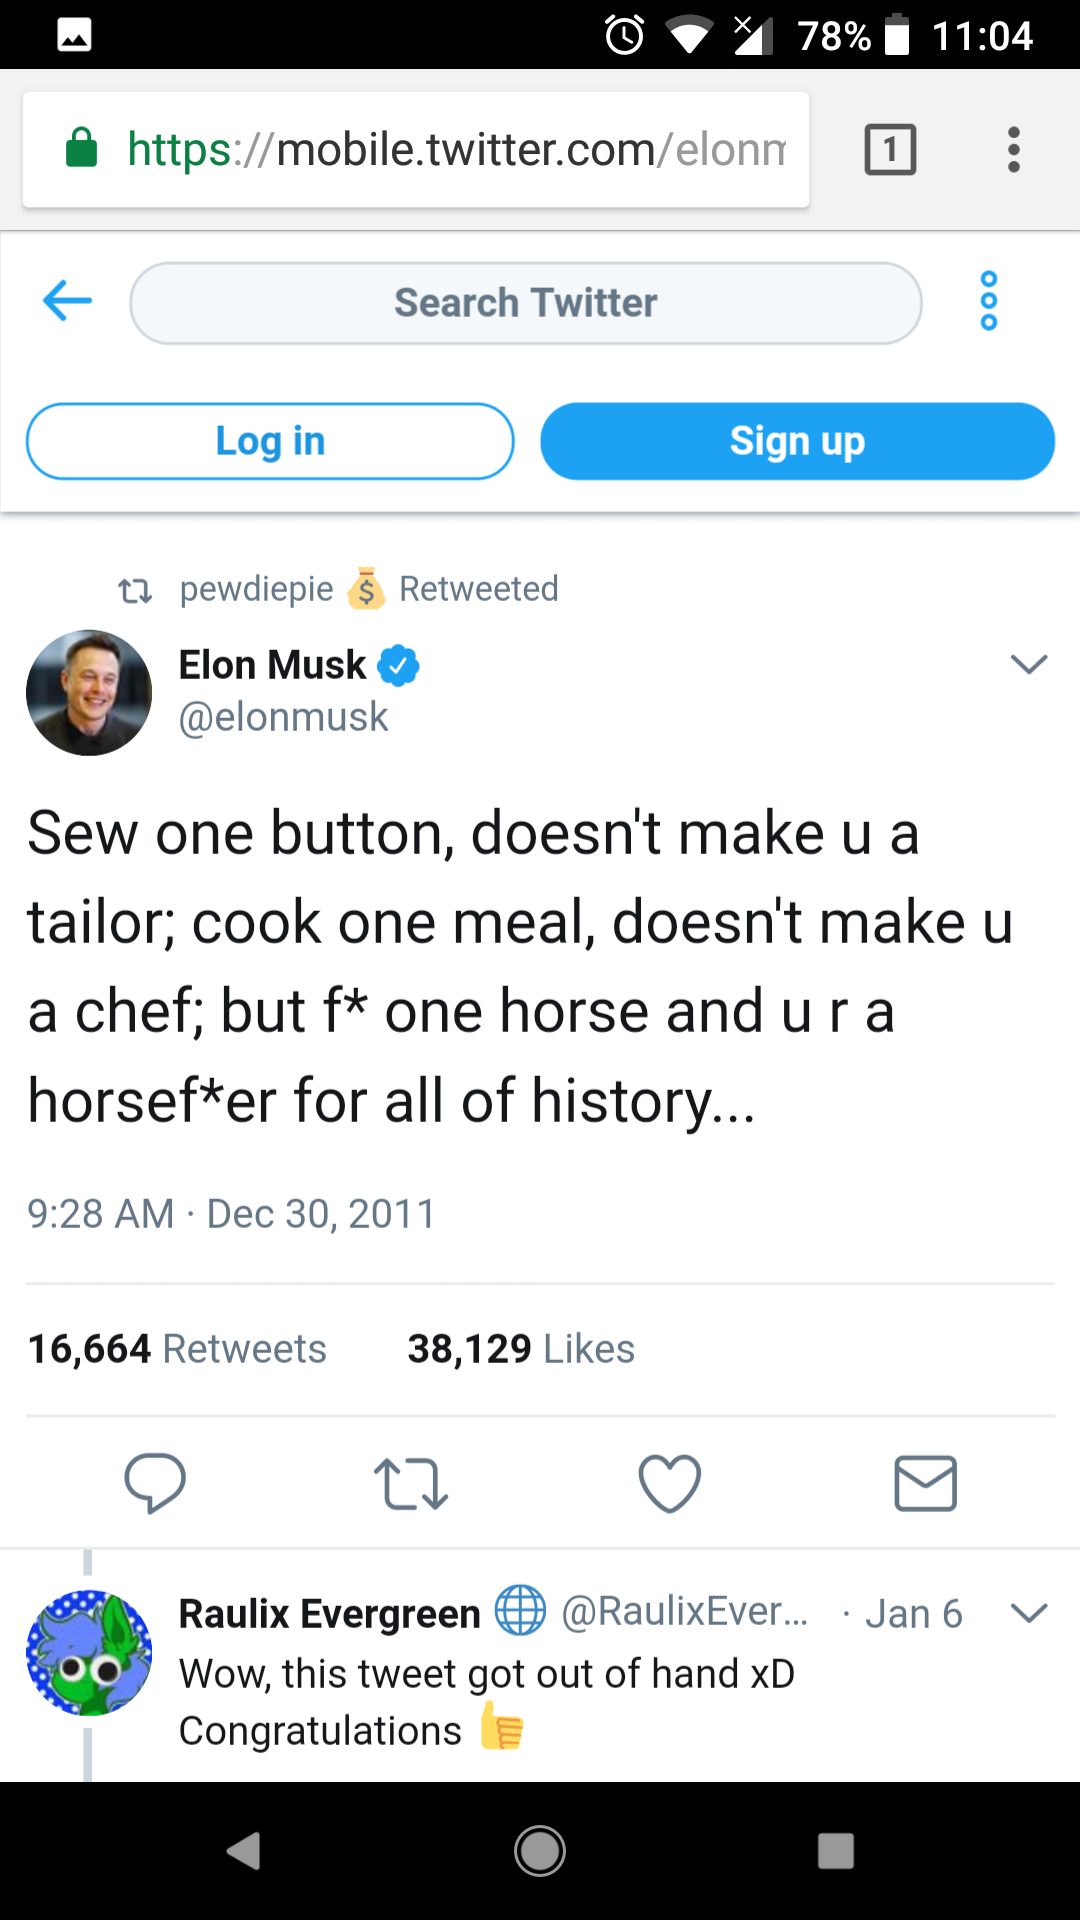 The world needs more people like Elon musk.